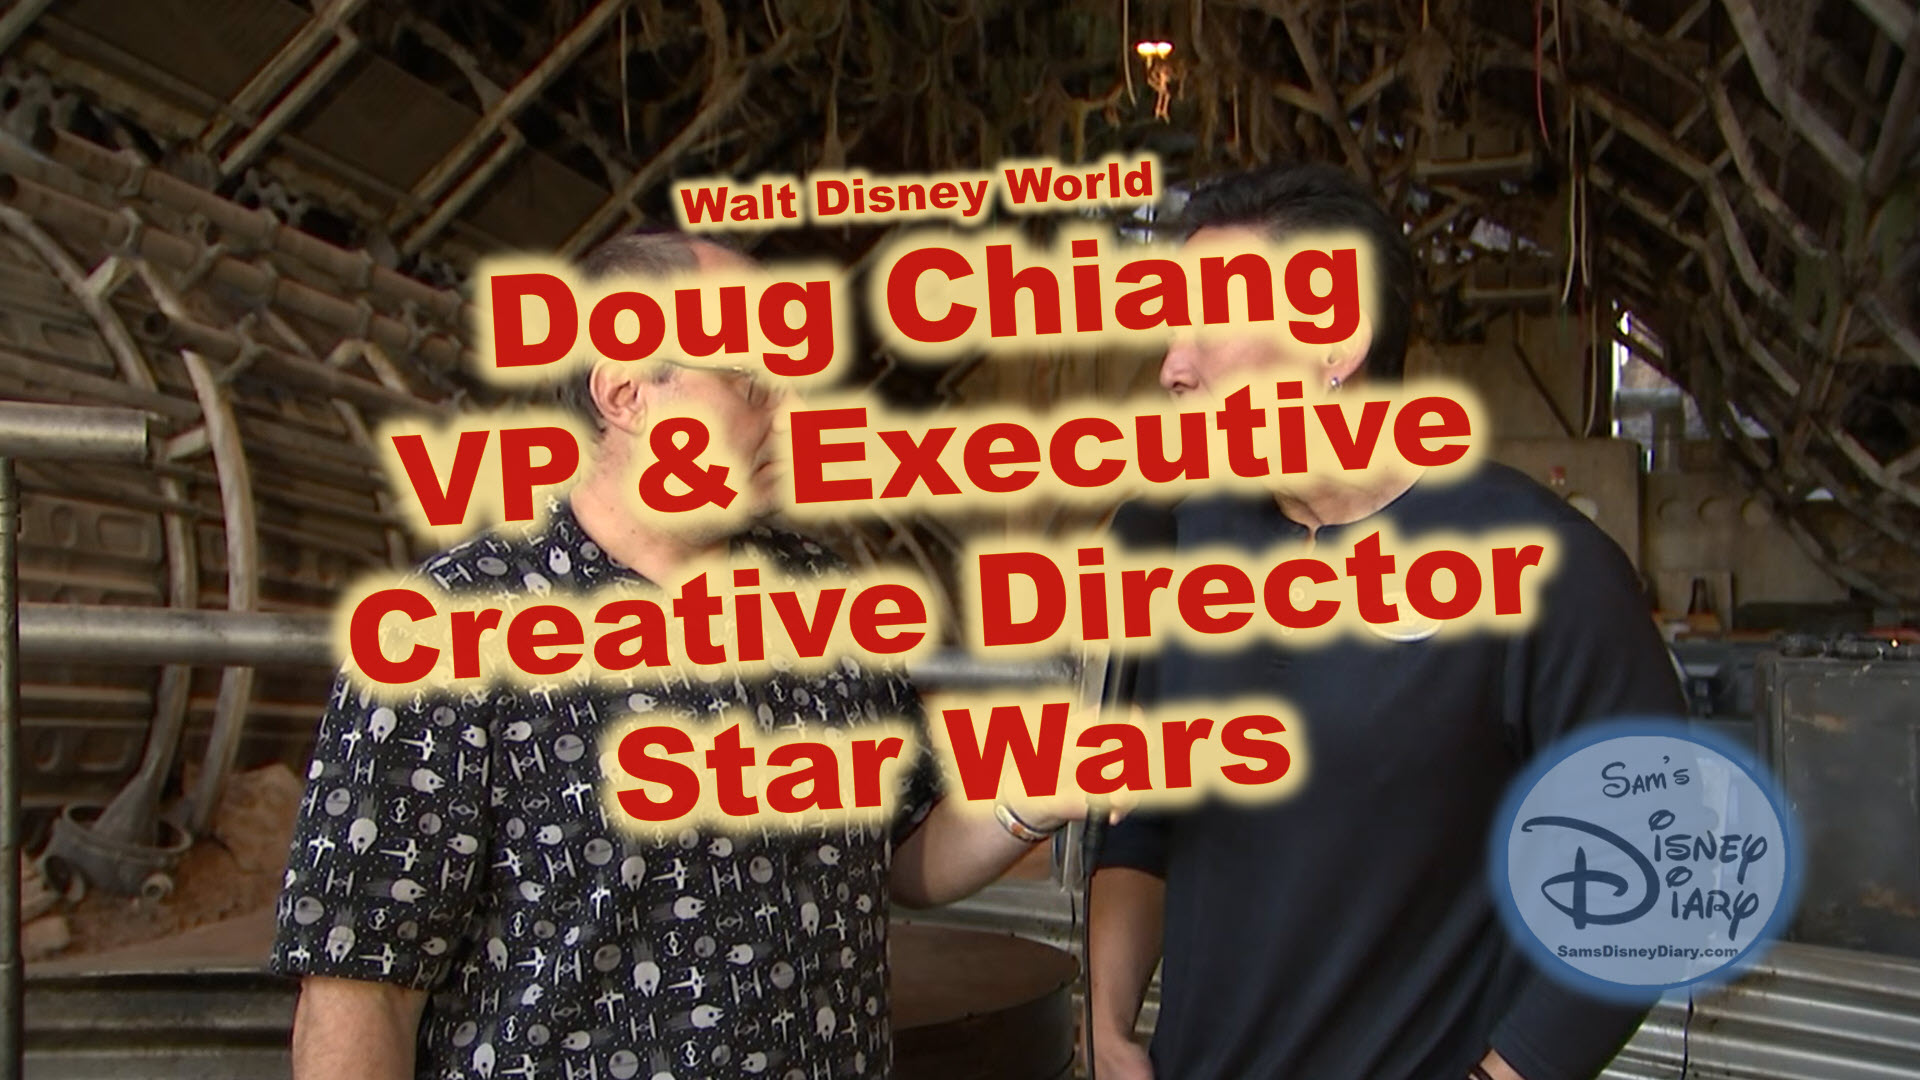 Galaxy's Edge with Doug Chiang, VP & Executive Creative Director